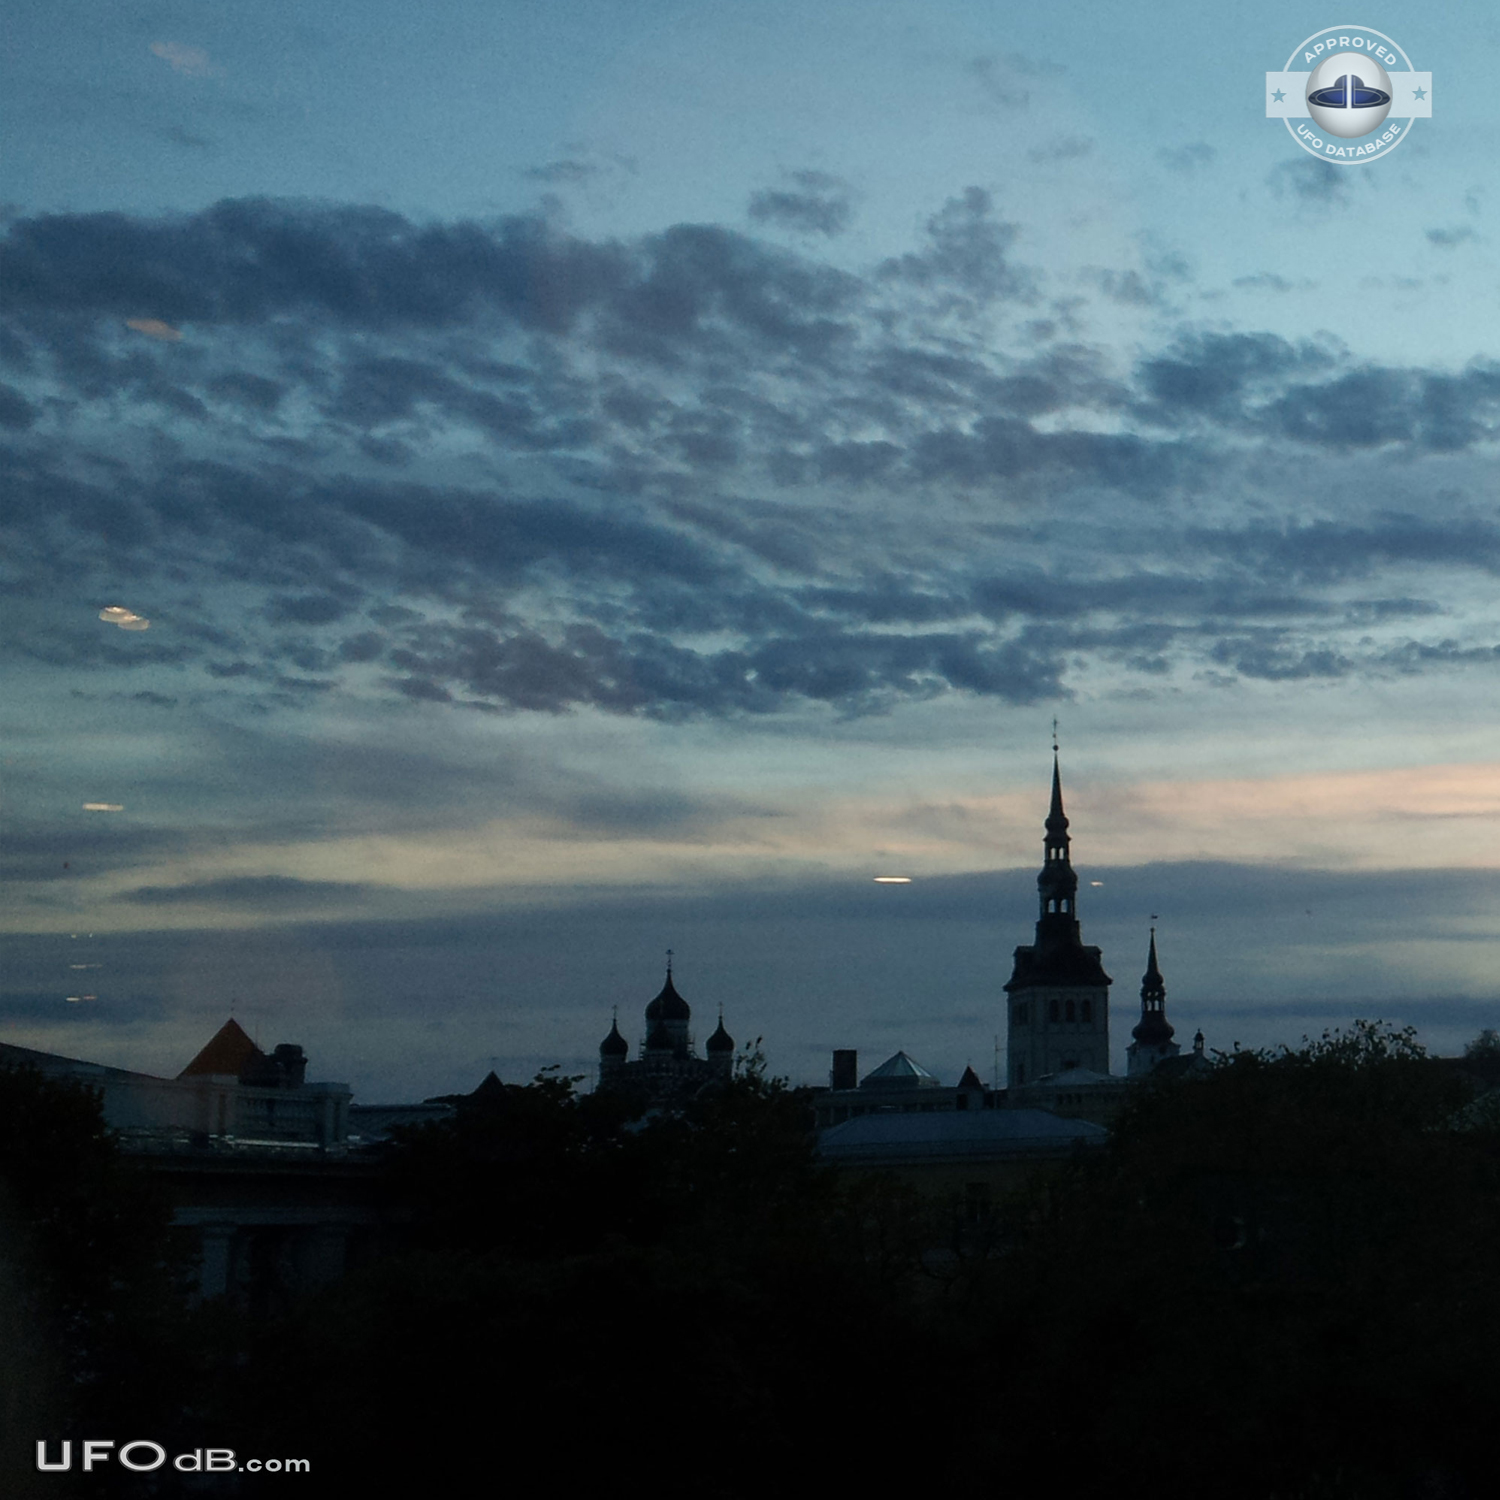 UFO photo captures several UFOs over Tallinn, Harju in Estonia 2012 UFO Picture #515-1